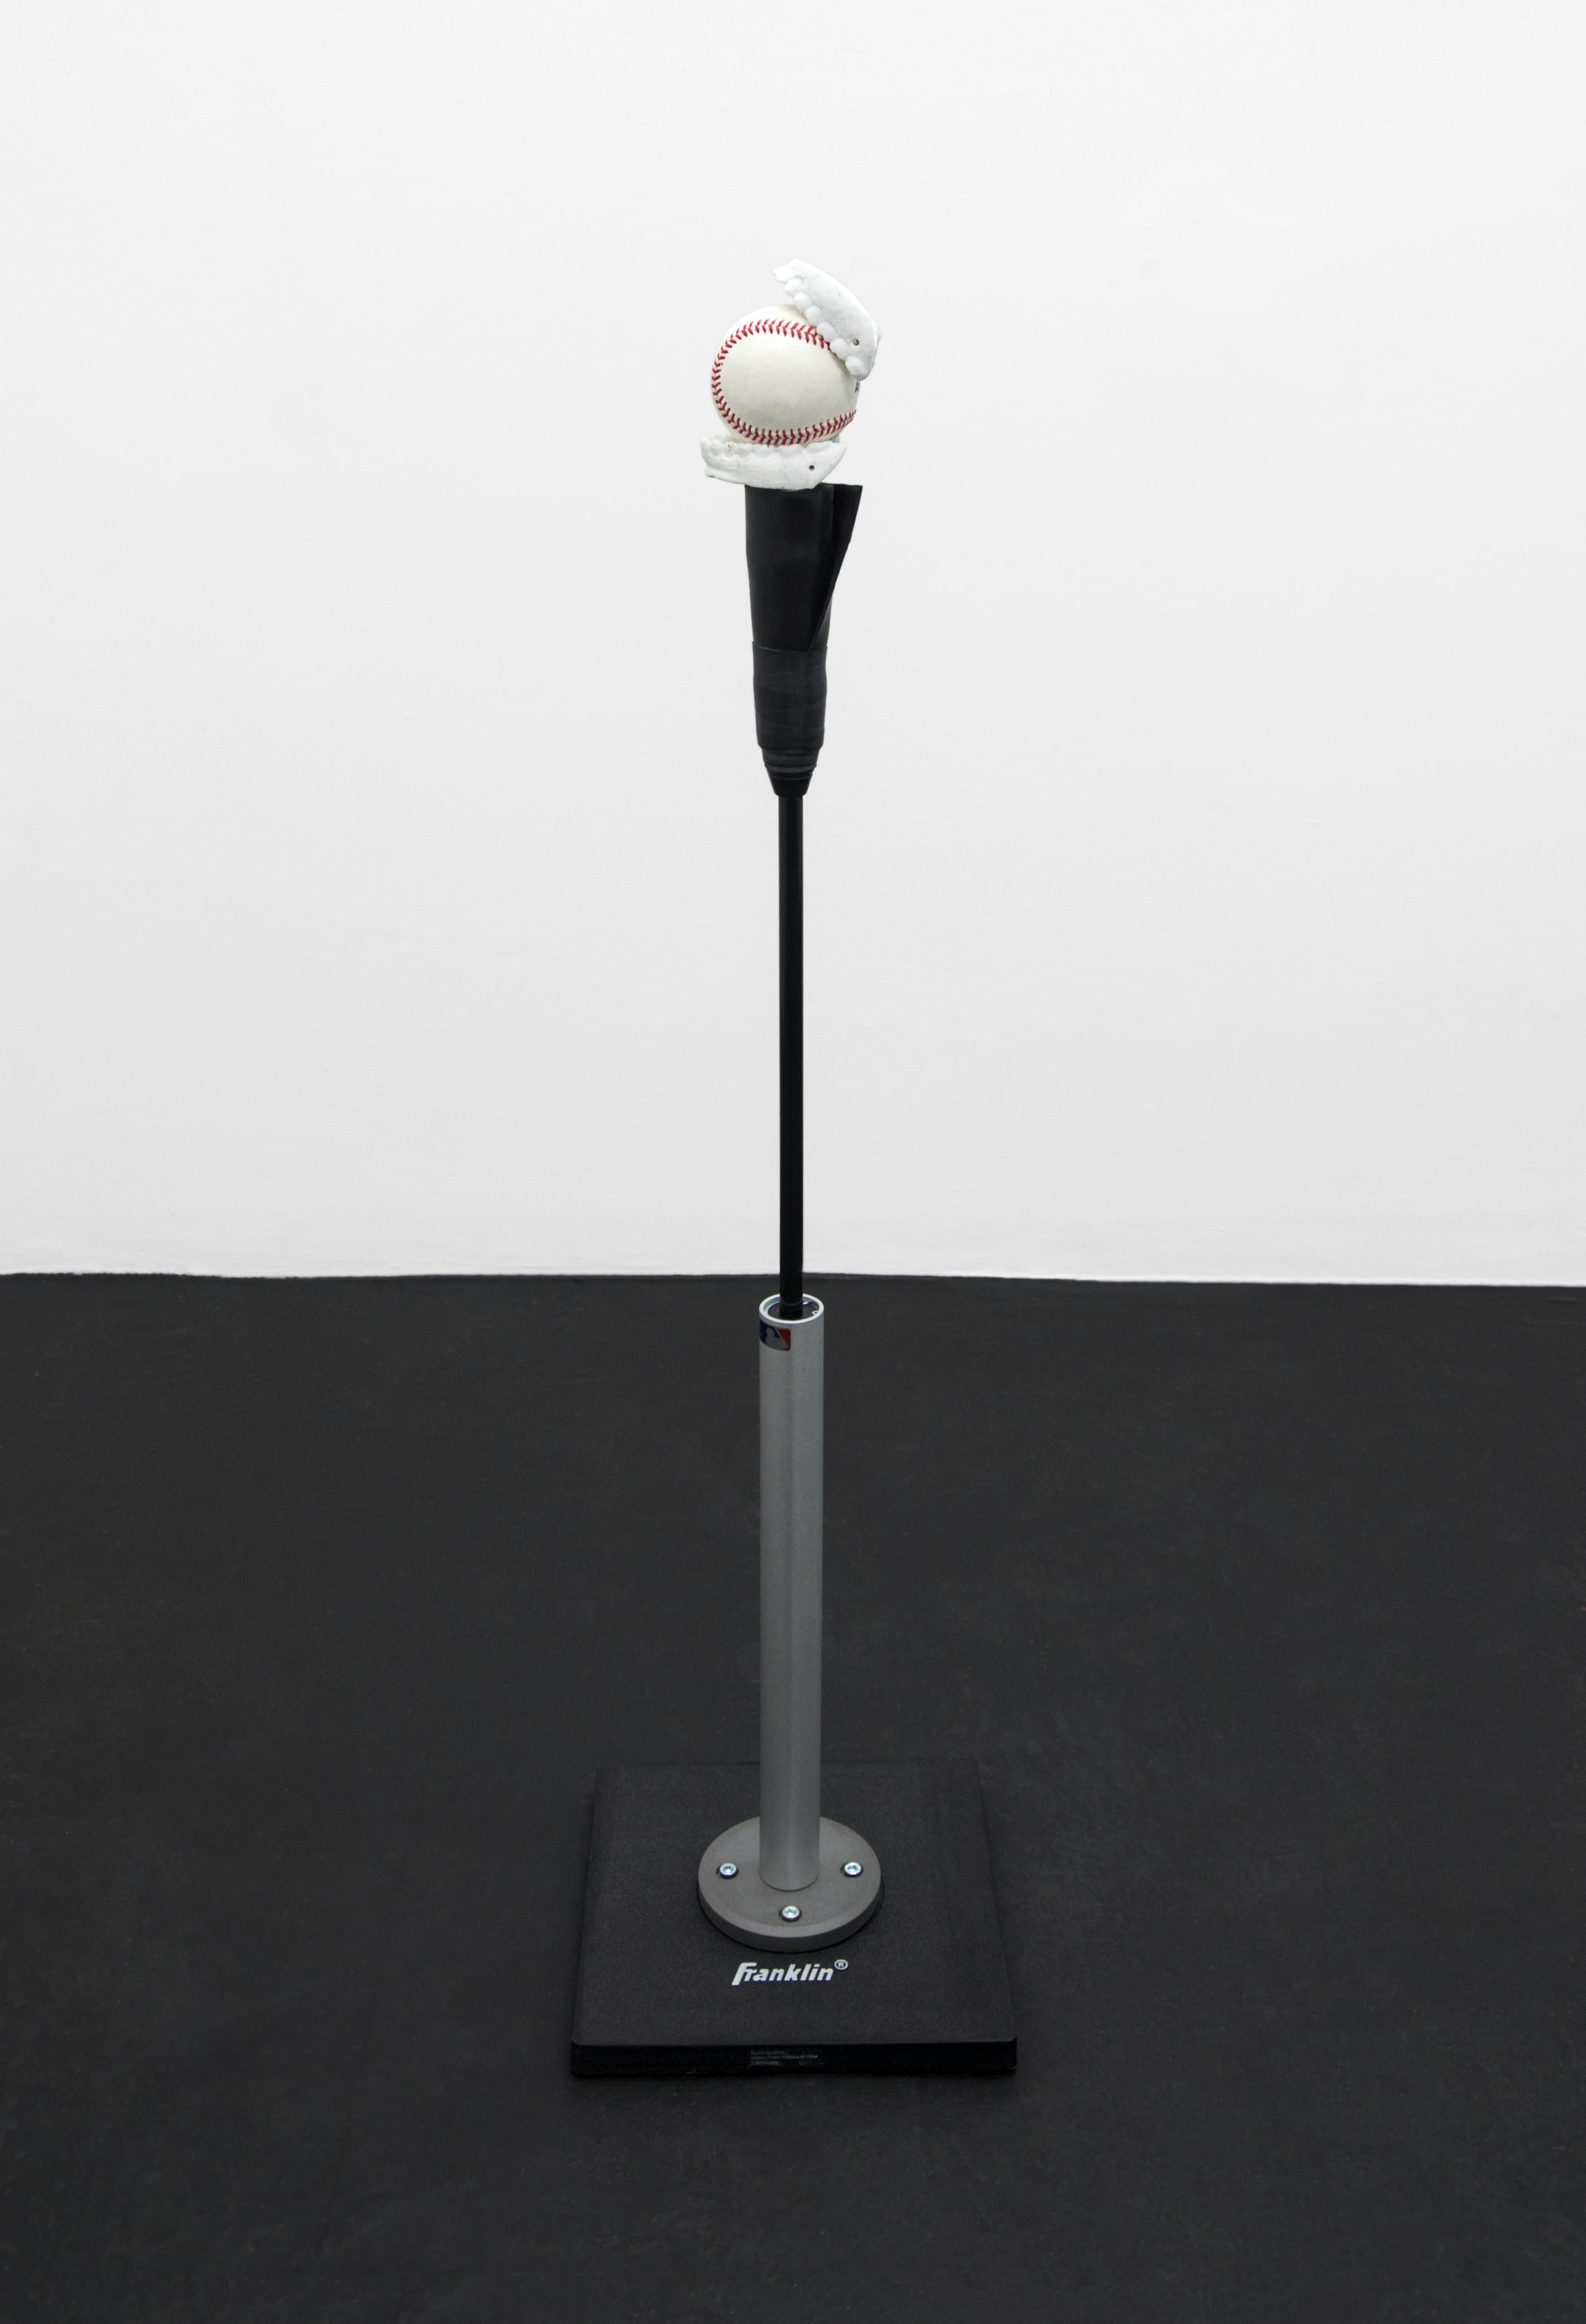 Diamond Stingily 

The Last Stage of Love (2017)
Carrara marble, baseball, batting tee

40h x 10w inches